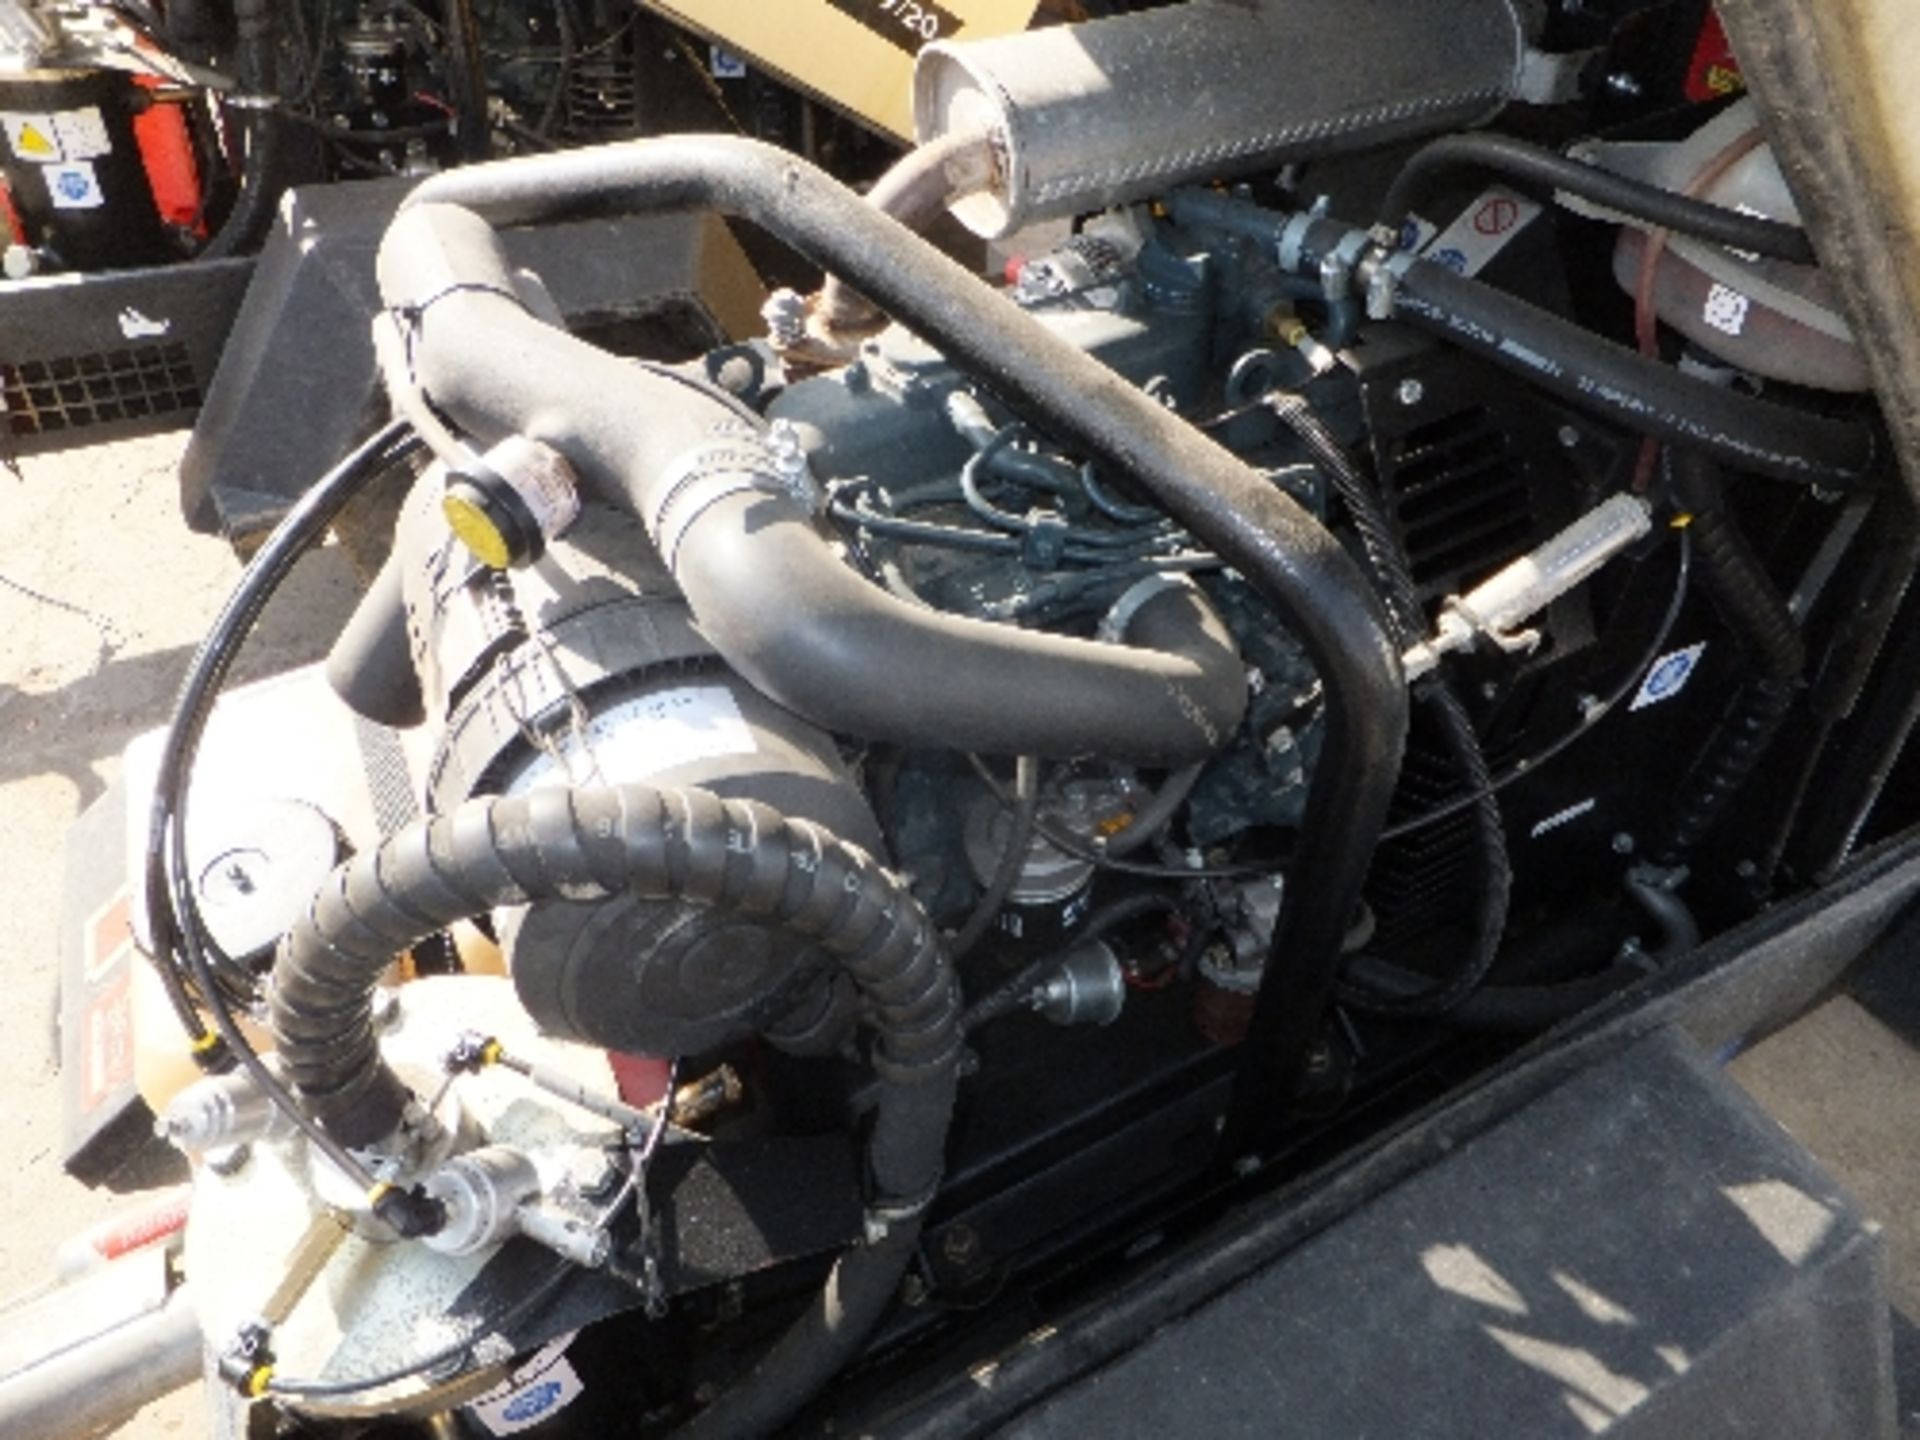 Doosan 7/20 compressor (2010) RMA, 407 hrs
MA0091125 - Image 2 of 2